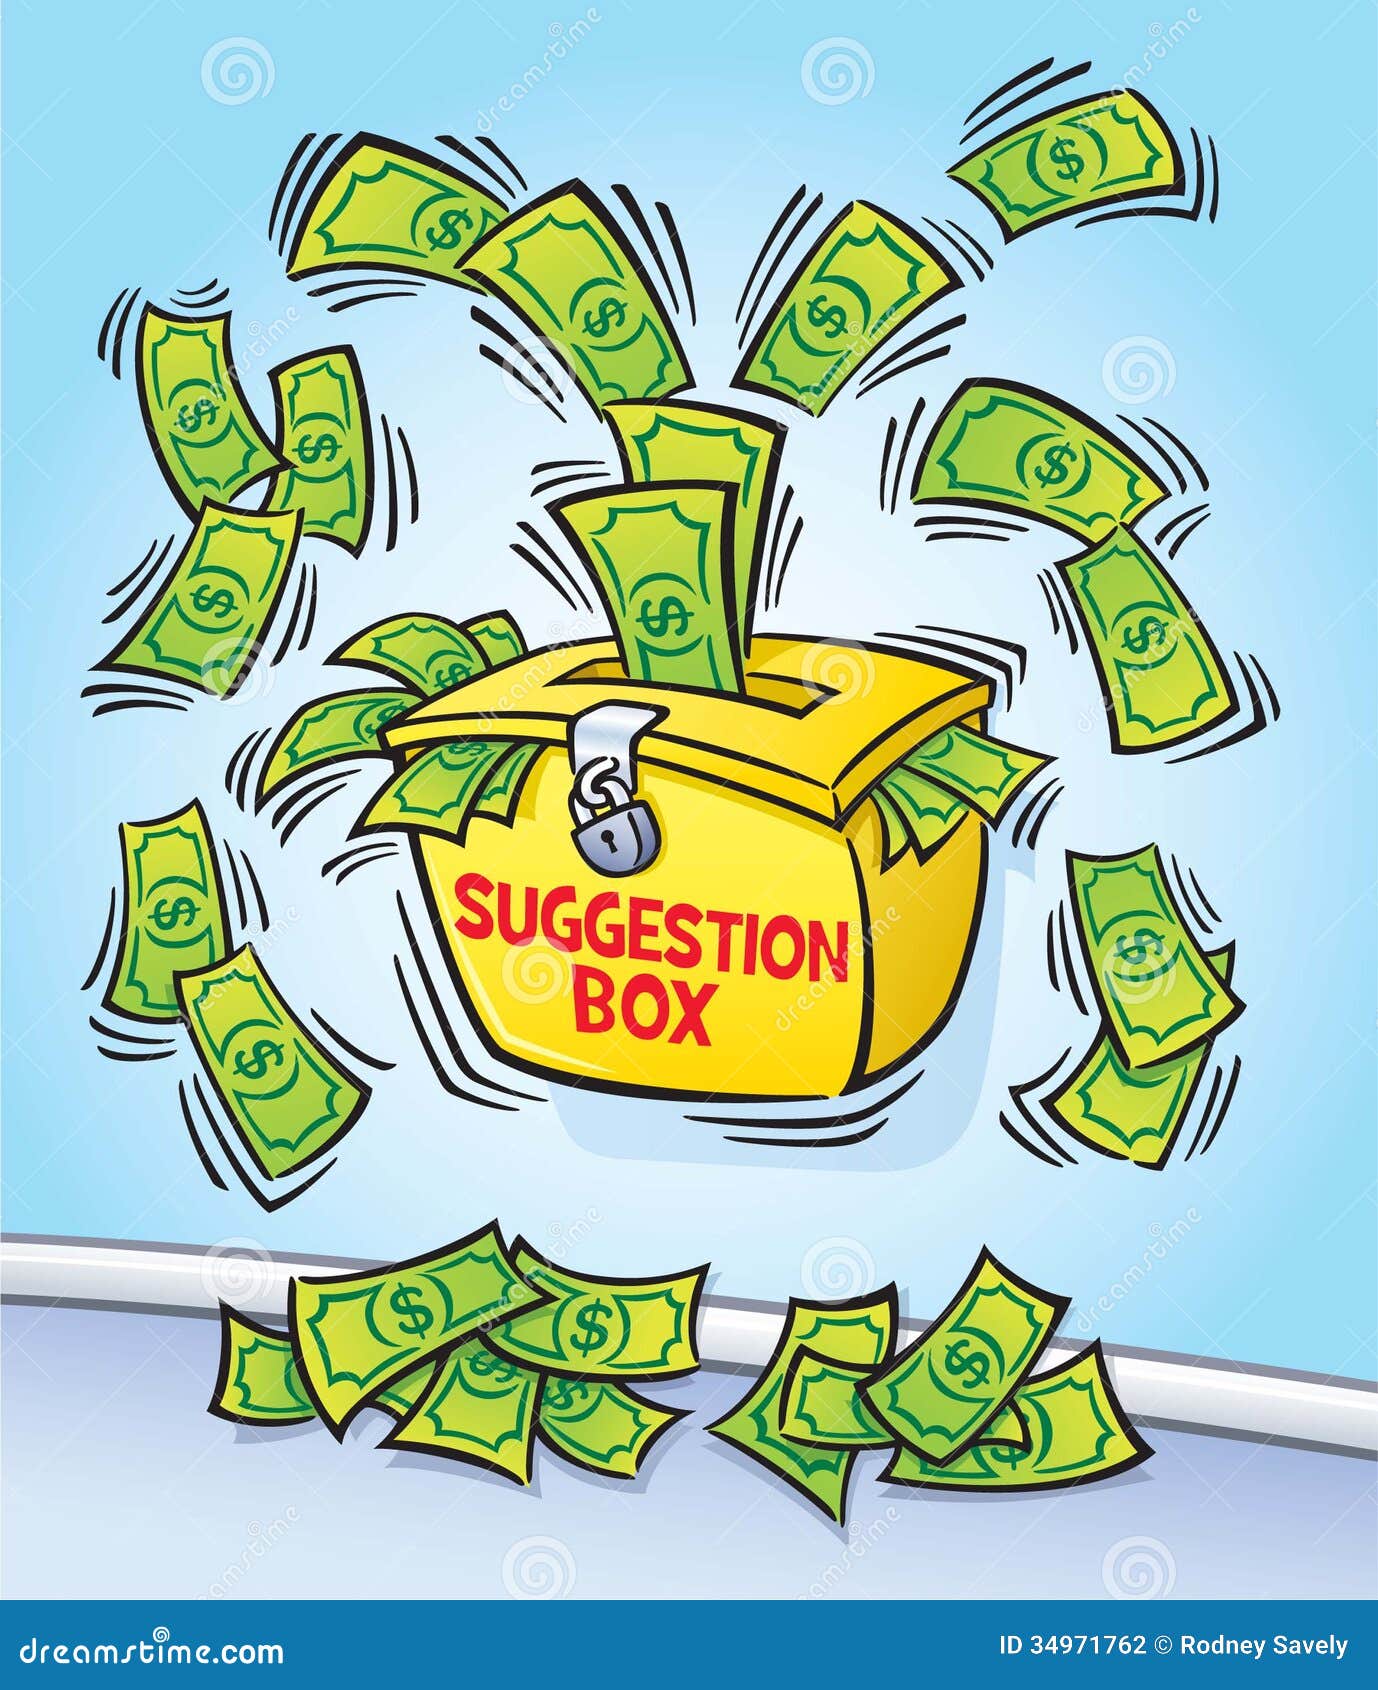 money box clipart - photo #46